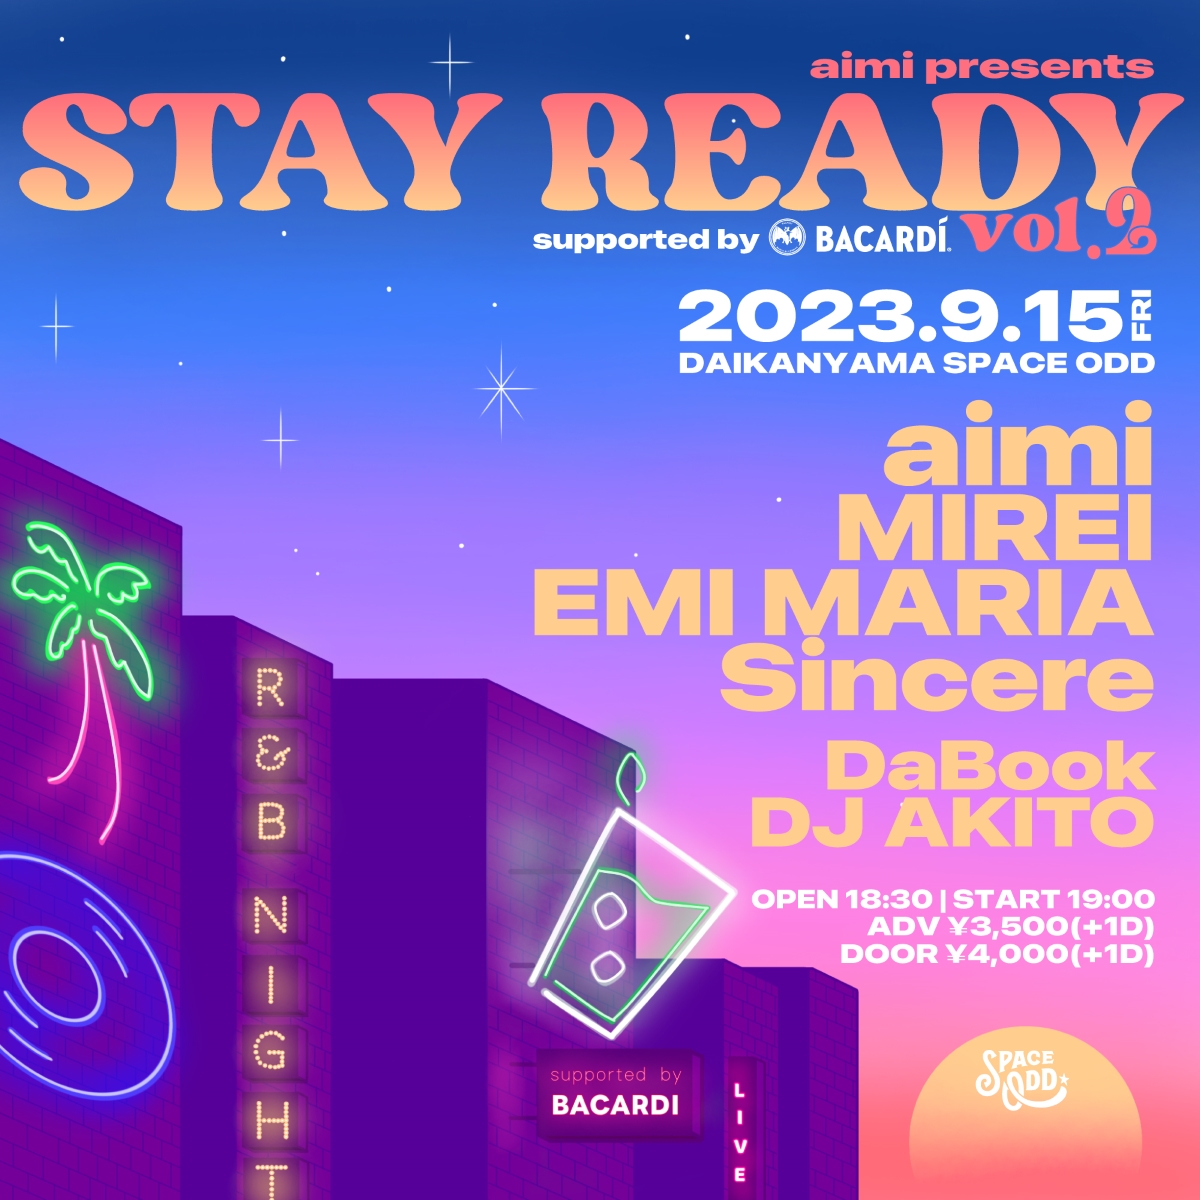 『aimi presents ‘STAY READY vol.2’ supported by BACARDI』告知画像